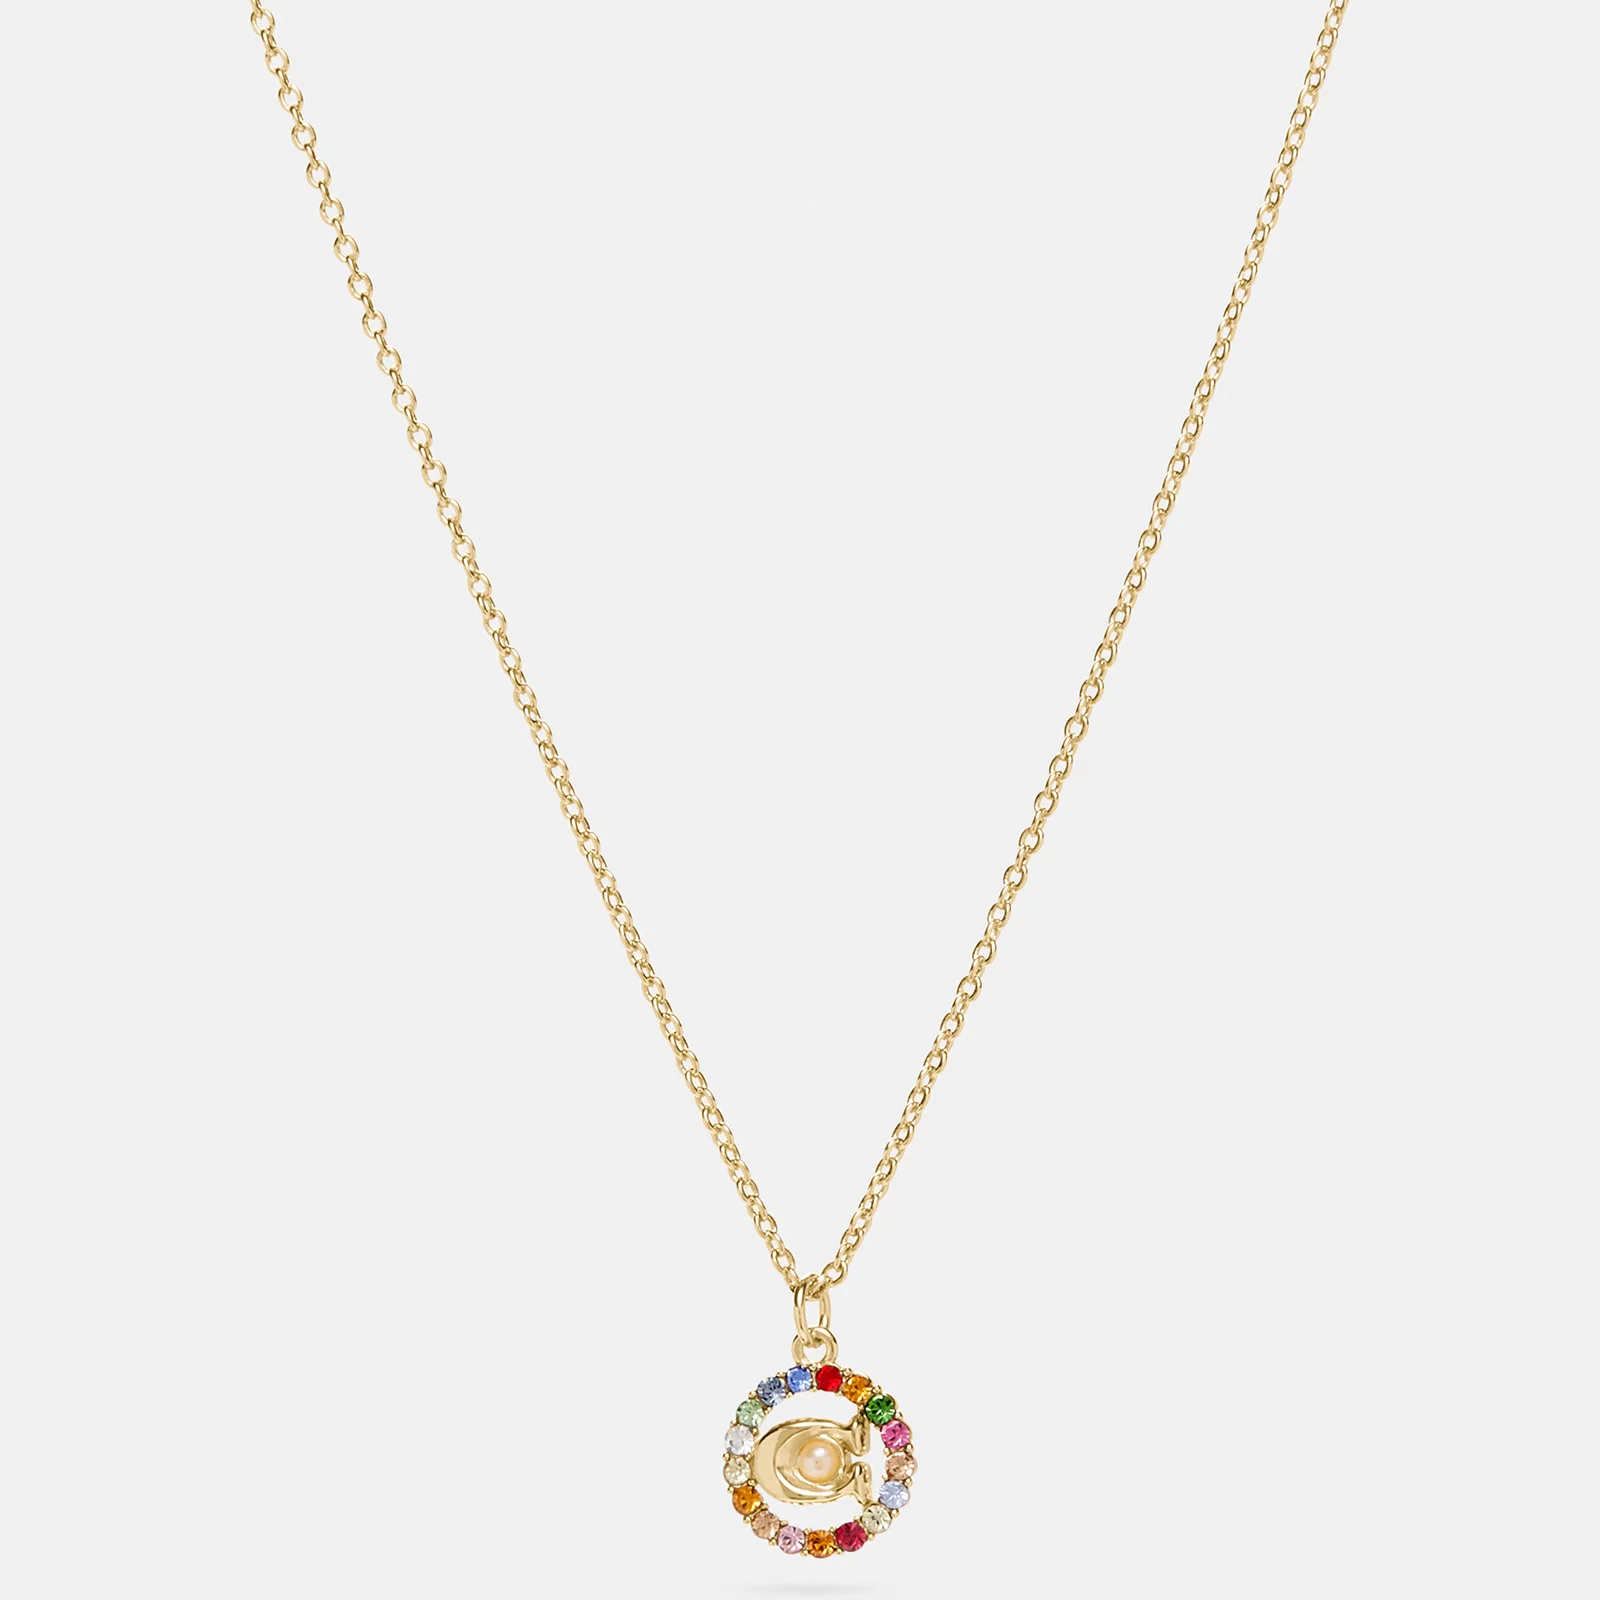 Coach Women's C Multi Crystal Necklace - Gold/Multicolour Image 1